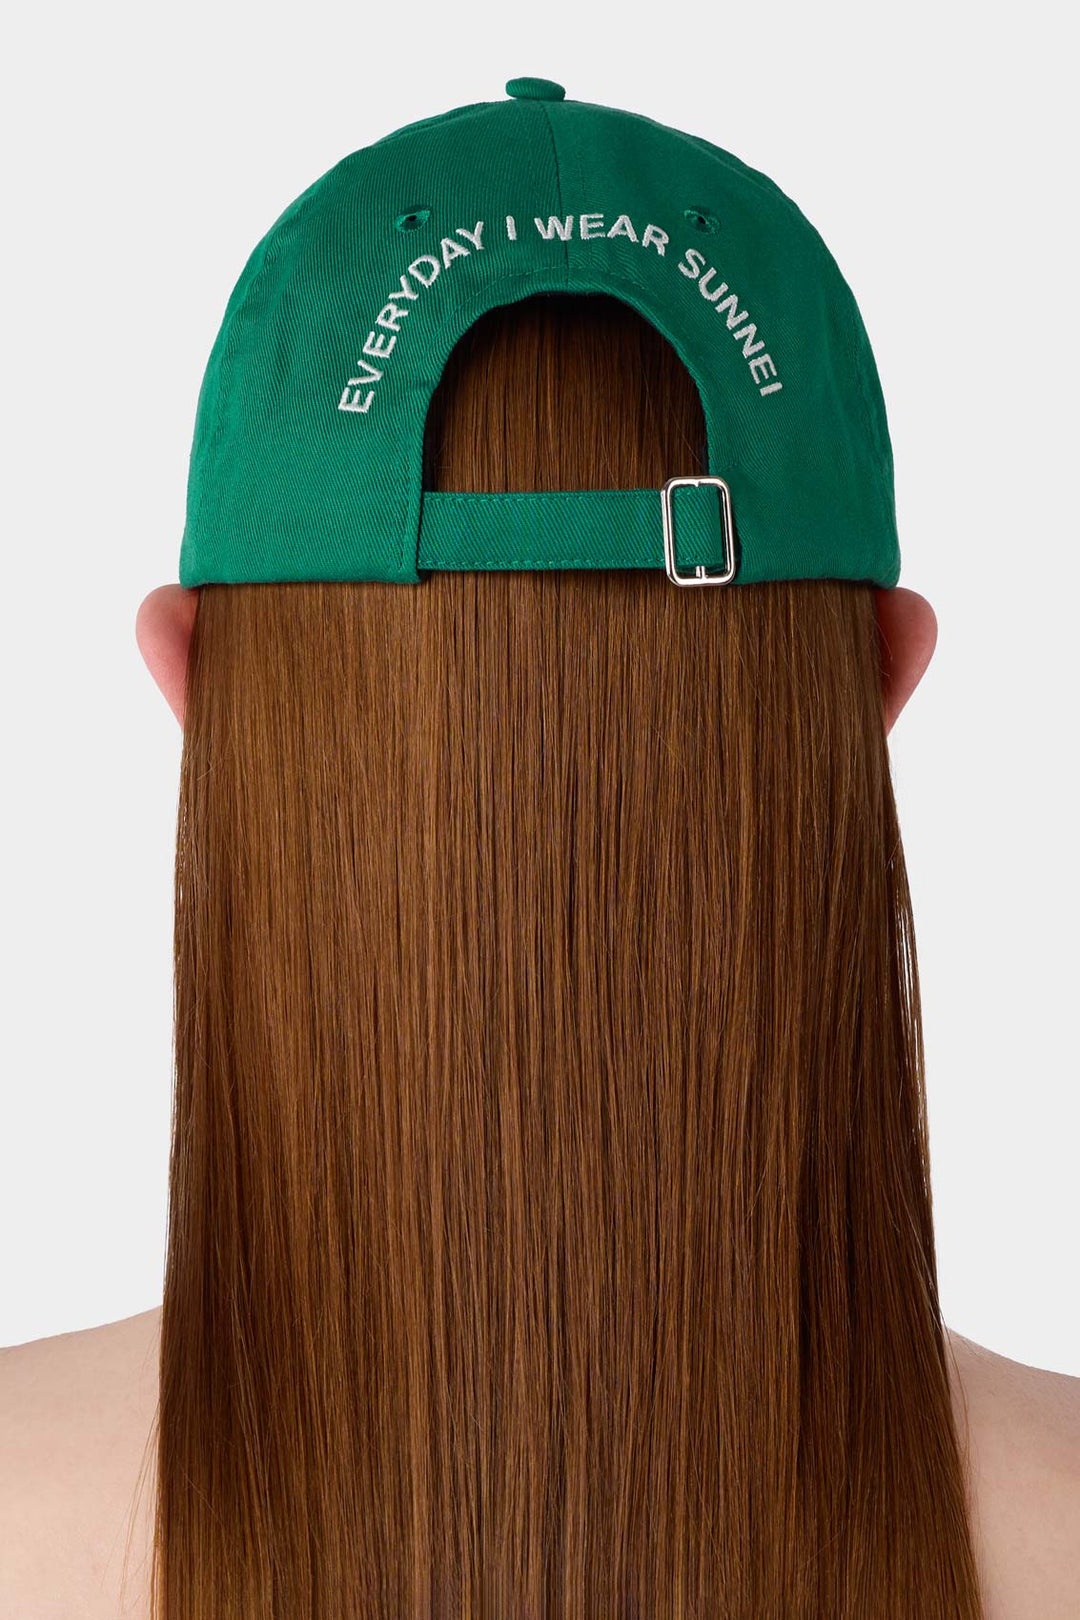 EIWS BASEBALL CAP / emerald green - 2